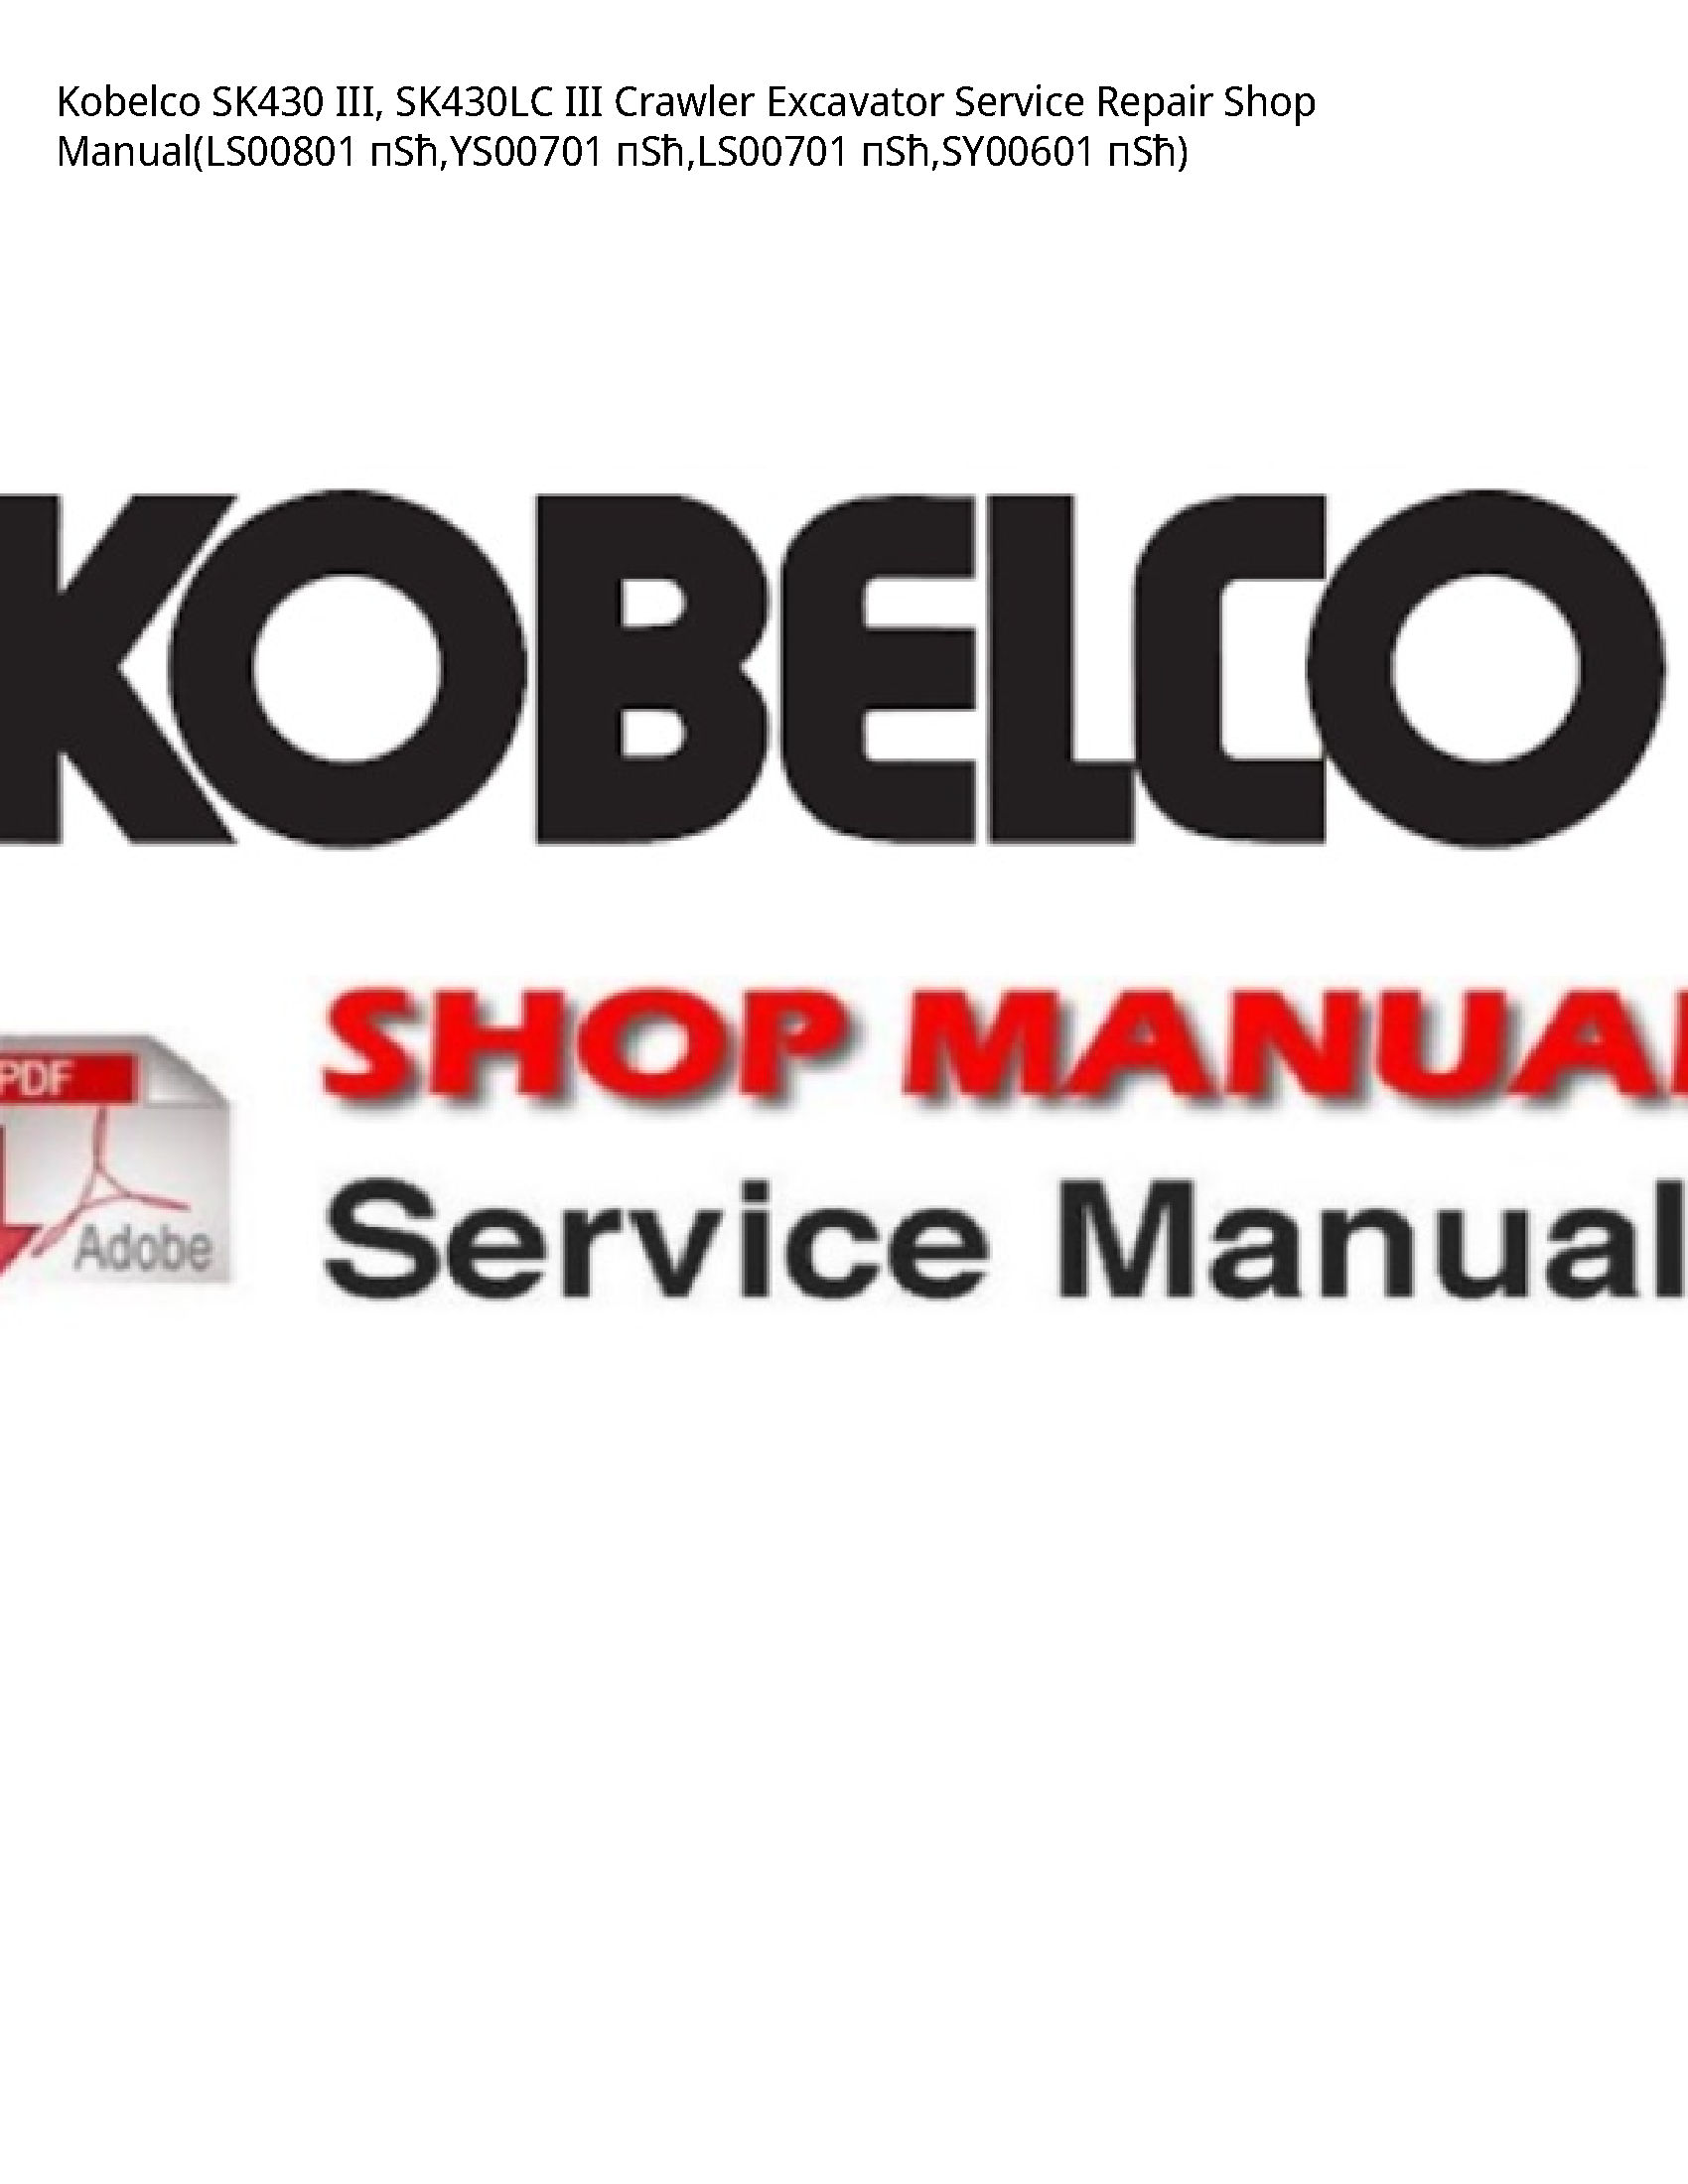 Kobelco SK430 III manual